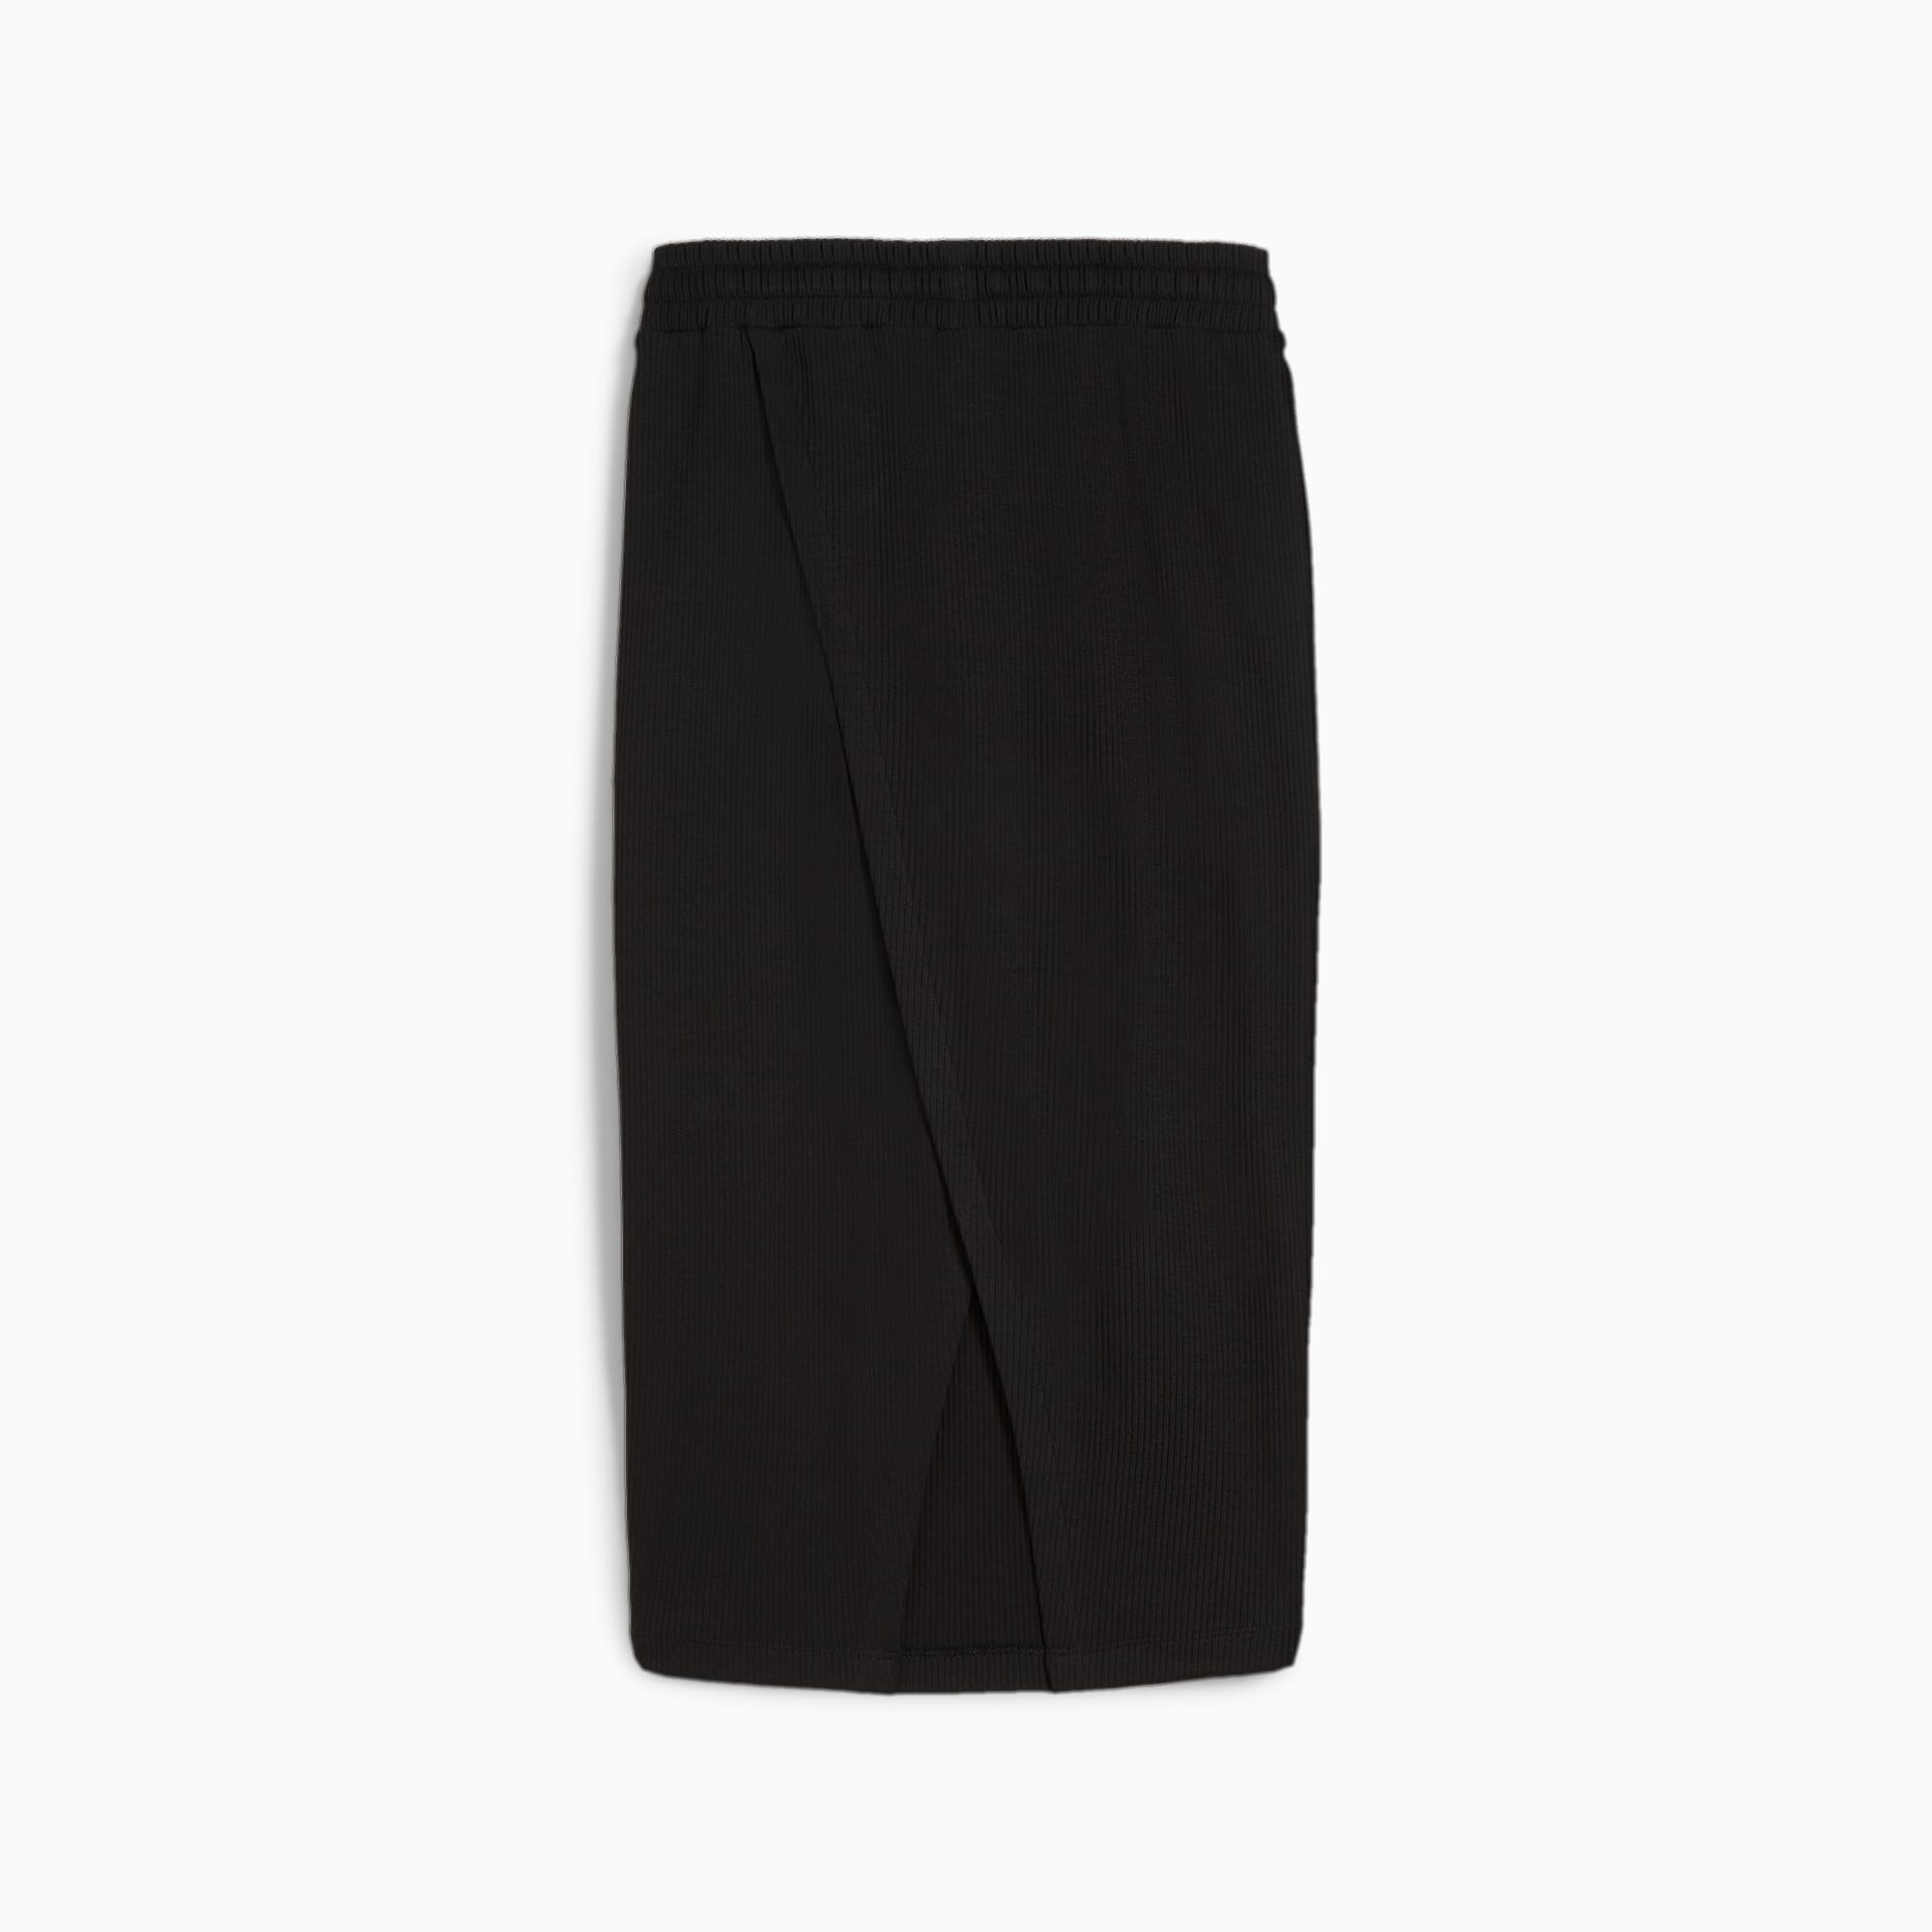 PUMA Classics Women's Ribbed Midi Skirt, Black, Size XXS, Clothing